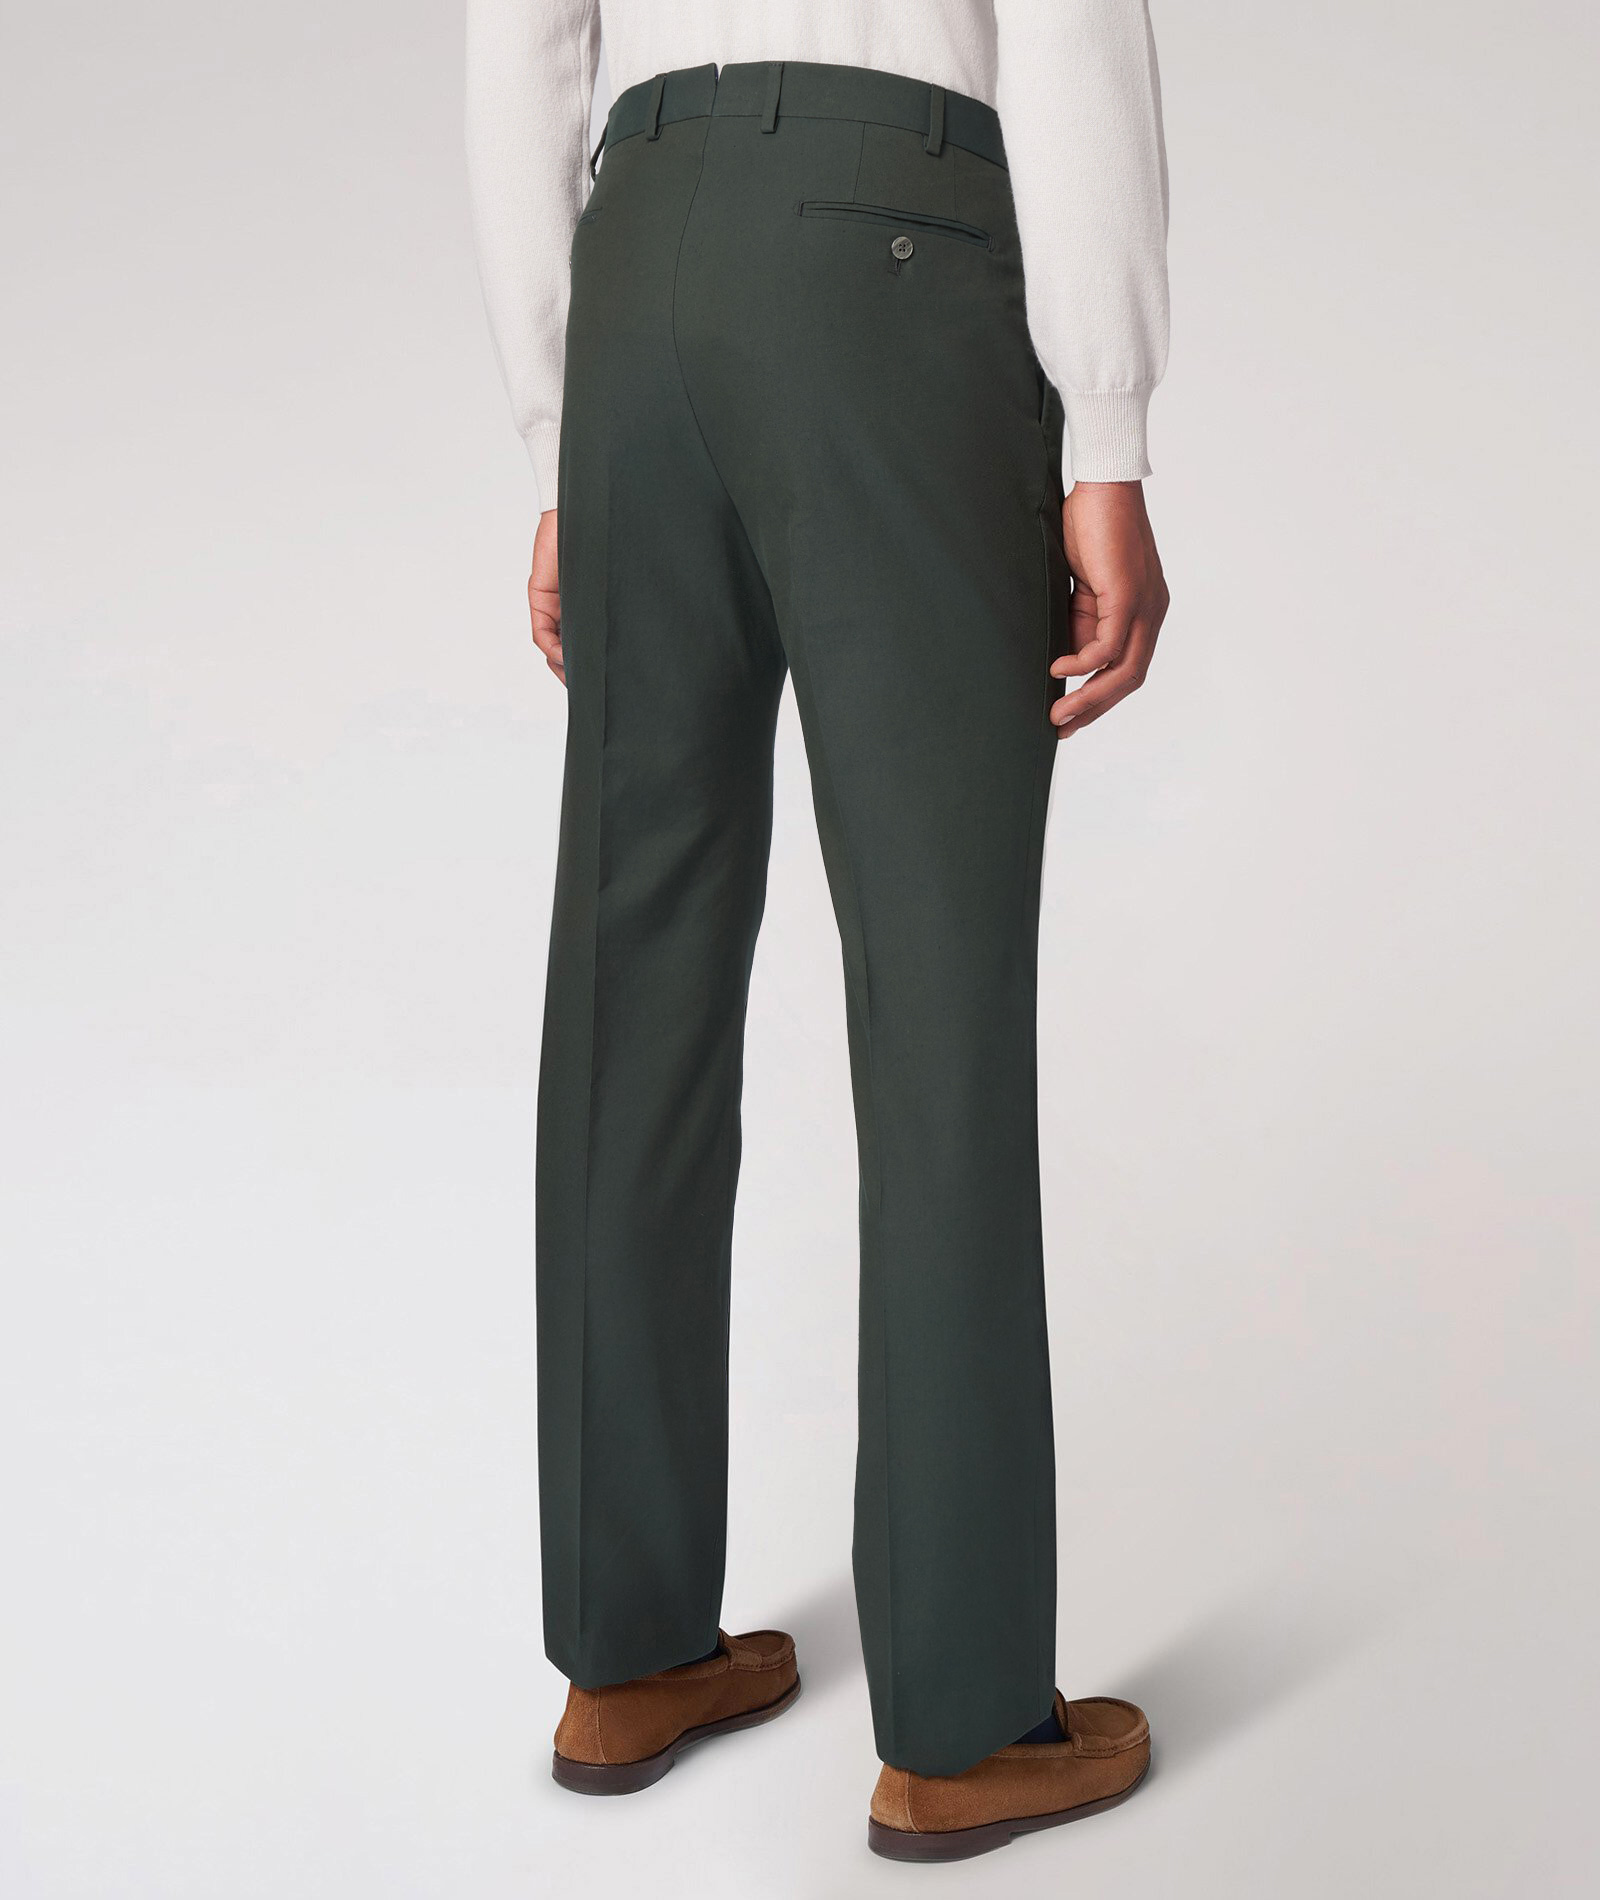 Luxury Slim Fit Mens Formal Grey Formal Pants Black From Easyshop_2009,  $32.69 | DHgate.Com